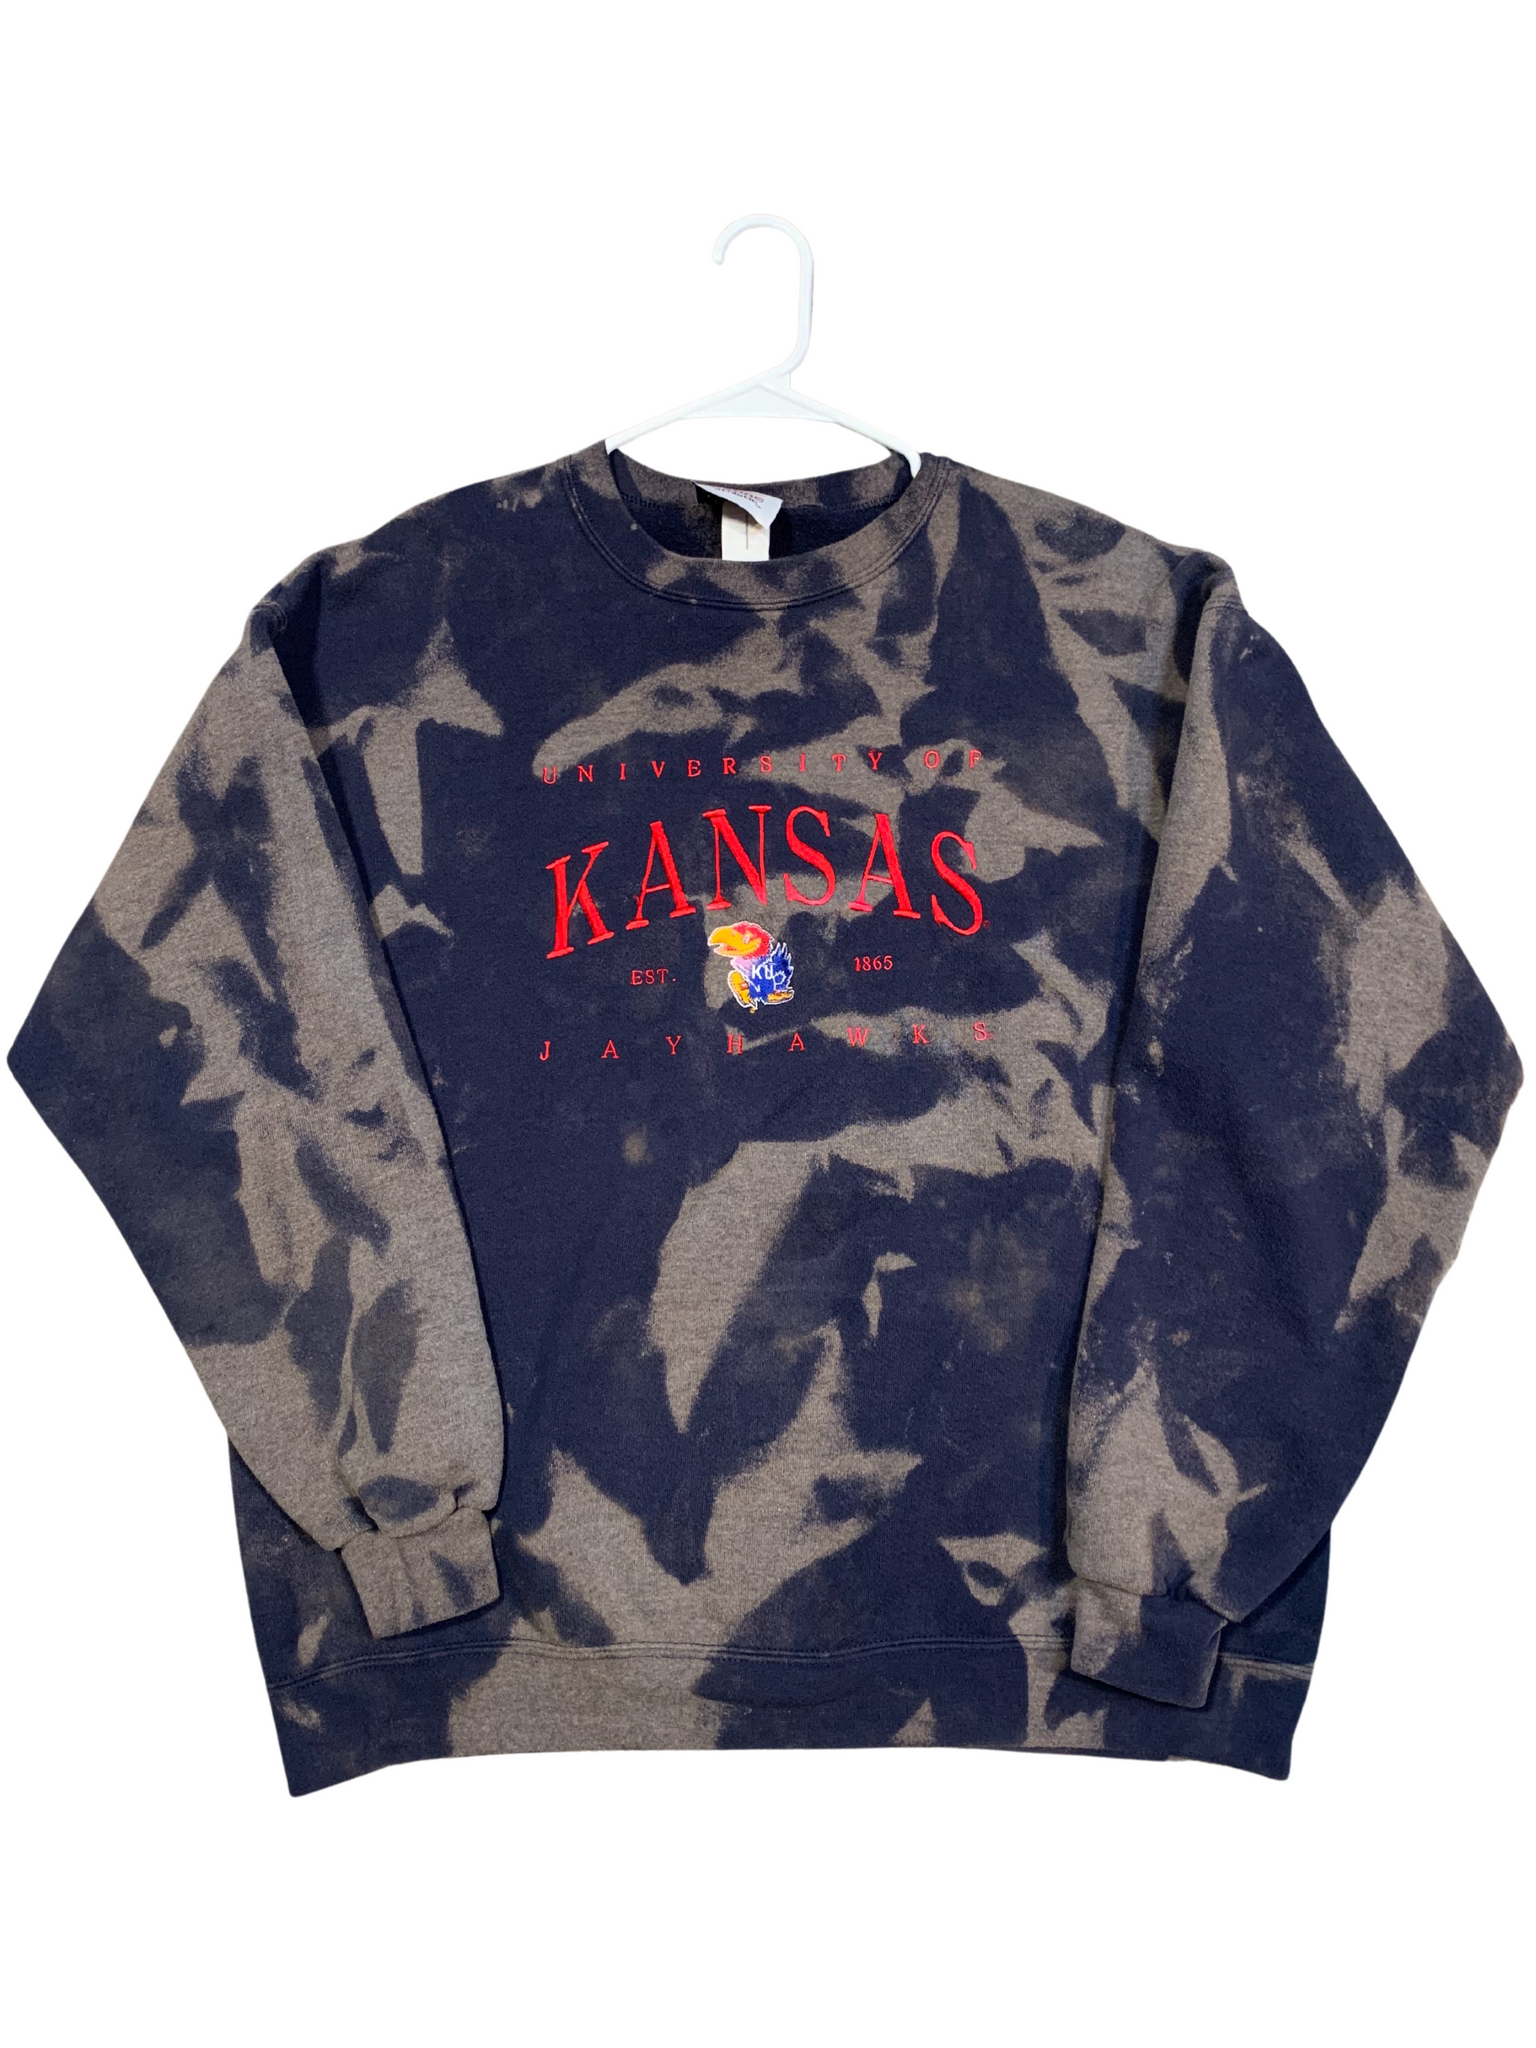 Vintage University of Kansas Bleached Sweatshirt